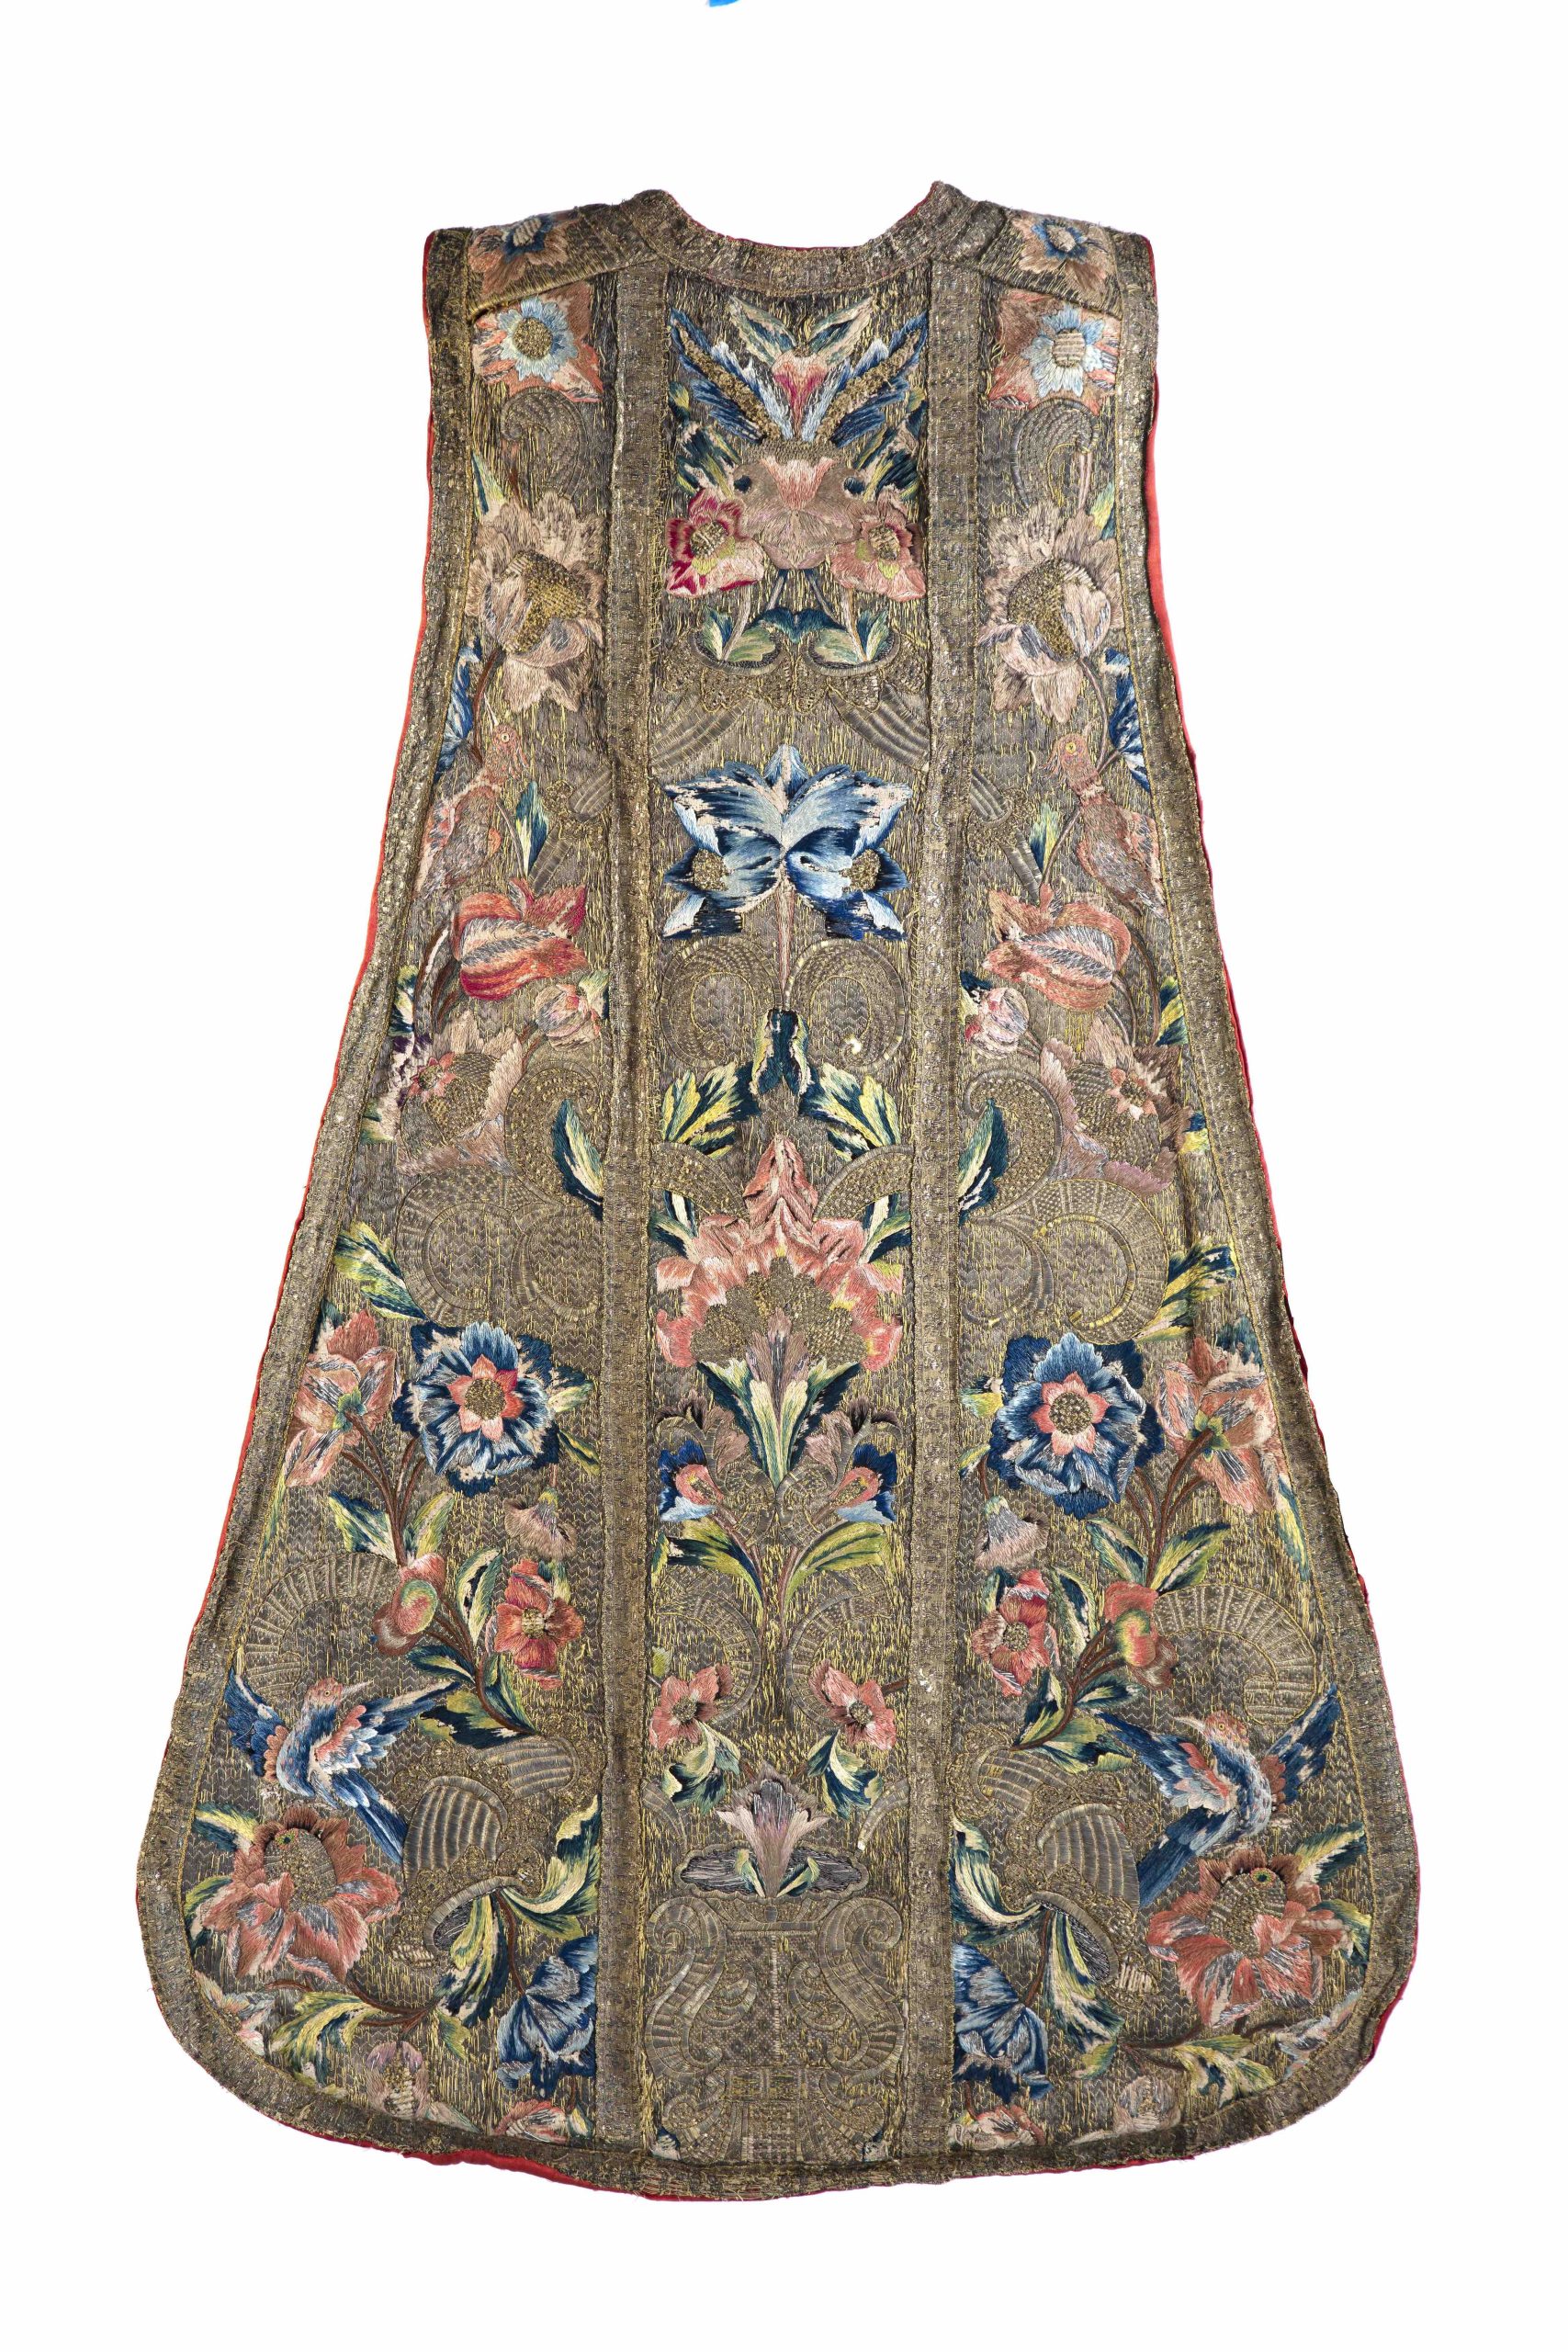 ecclesiastic robe embroidered in metallic thread